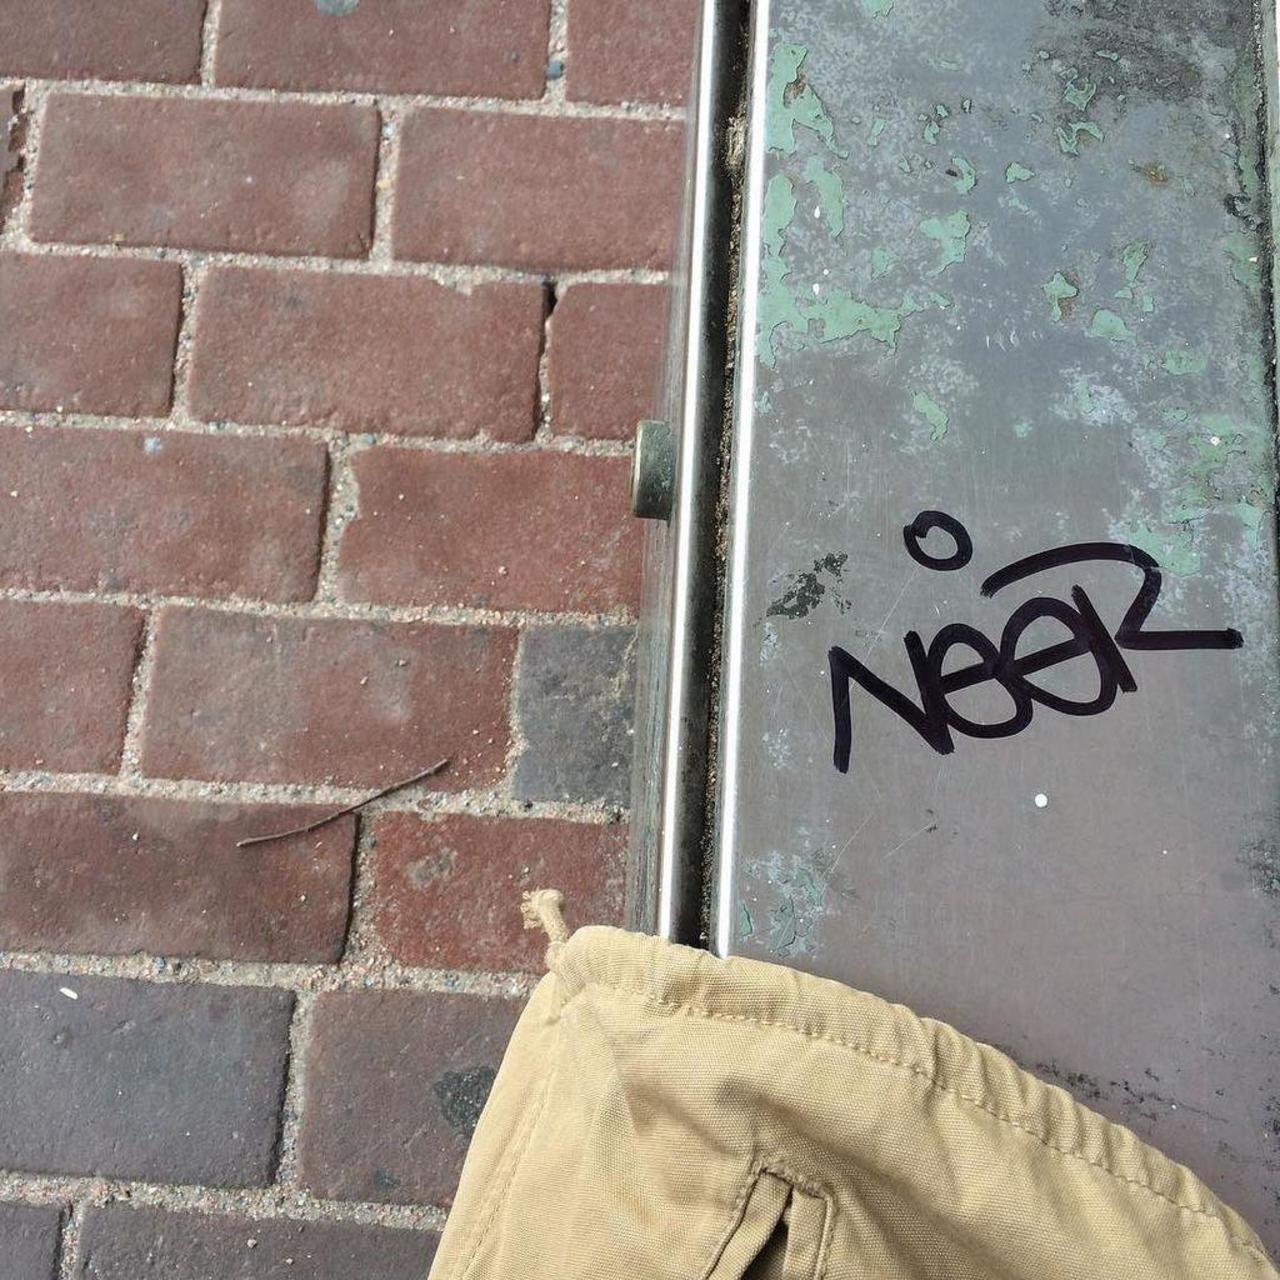 RT @artpushr: via #nearism "http://ift.tt/1VhMlUe" #graffiti #streetart http://t.co/EALVvTXbc1